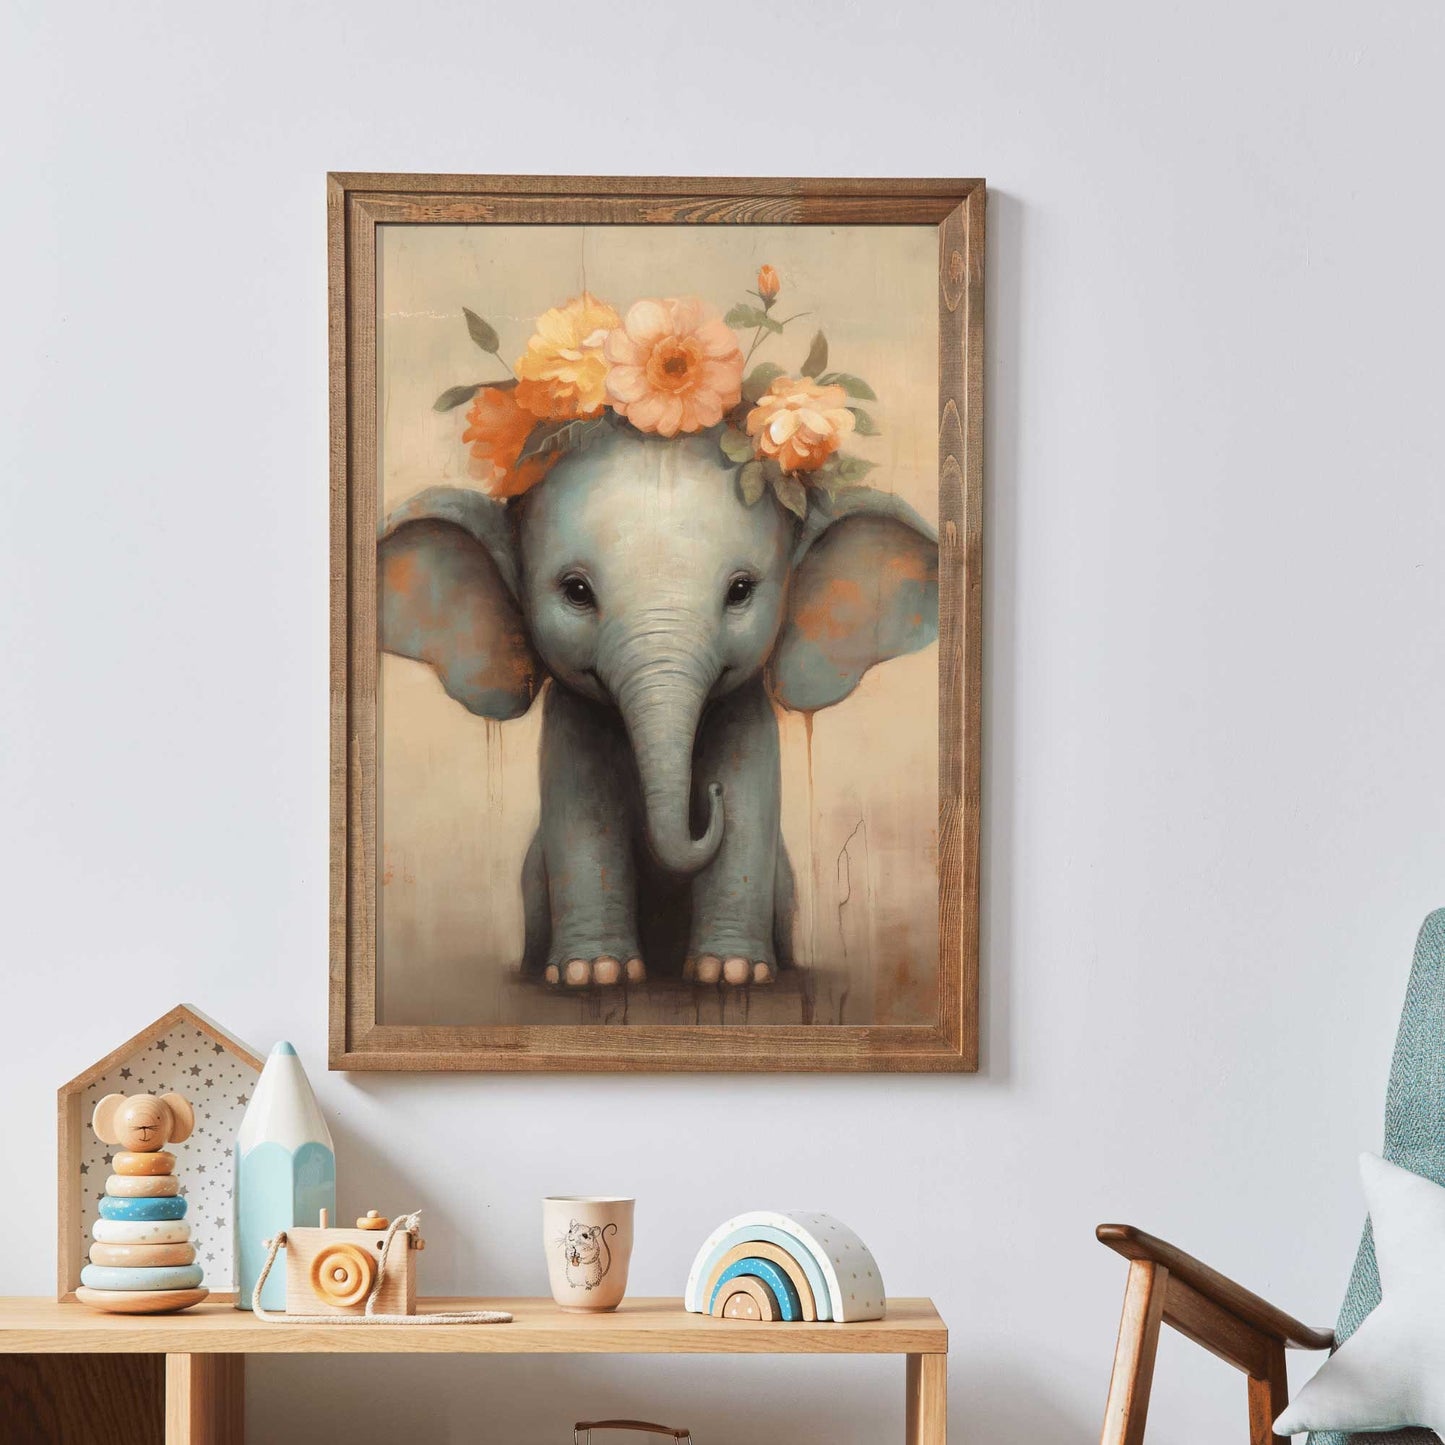 Vintage Nursery Animal Art, Baby Elephant with Flower Crown, Safari Animal Kids Room Decor, Cute Animal Girl's Room Print, Digital Art